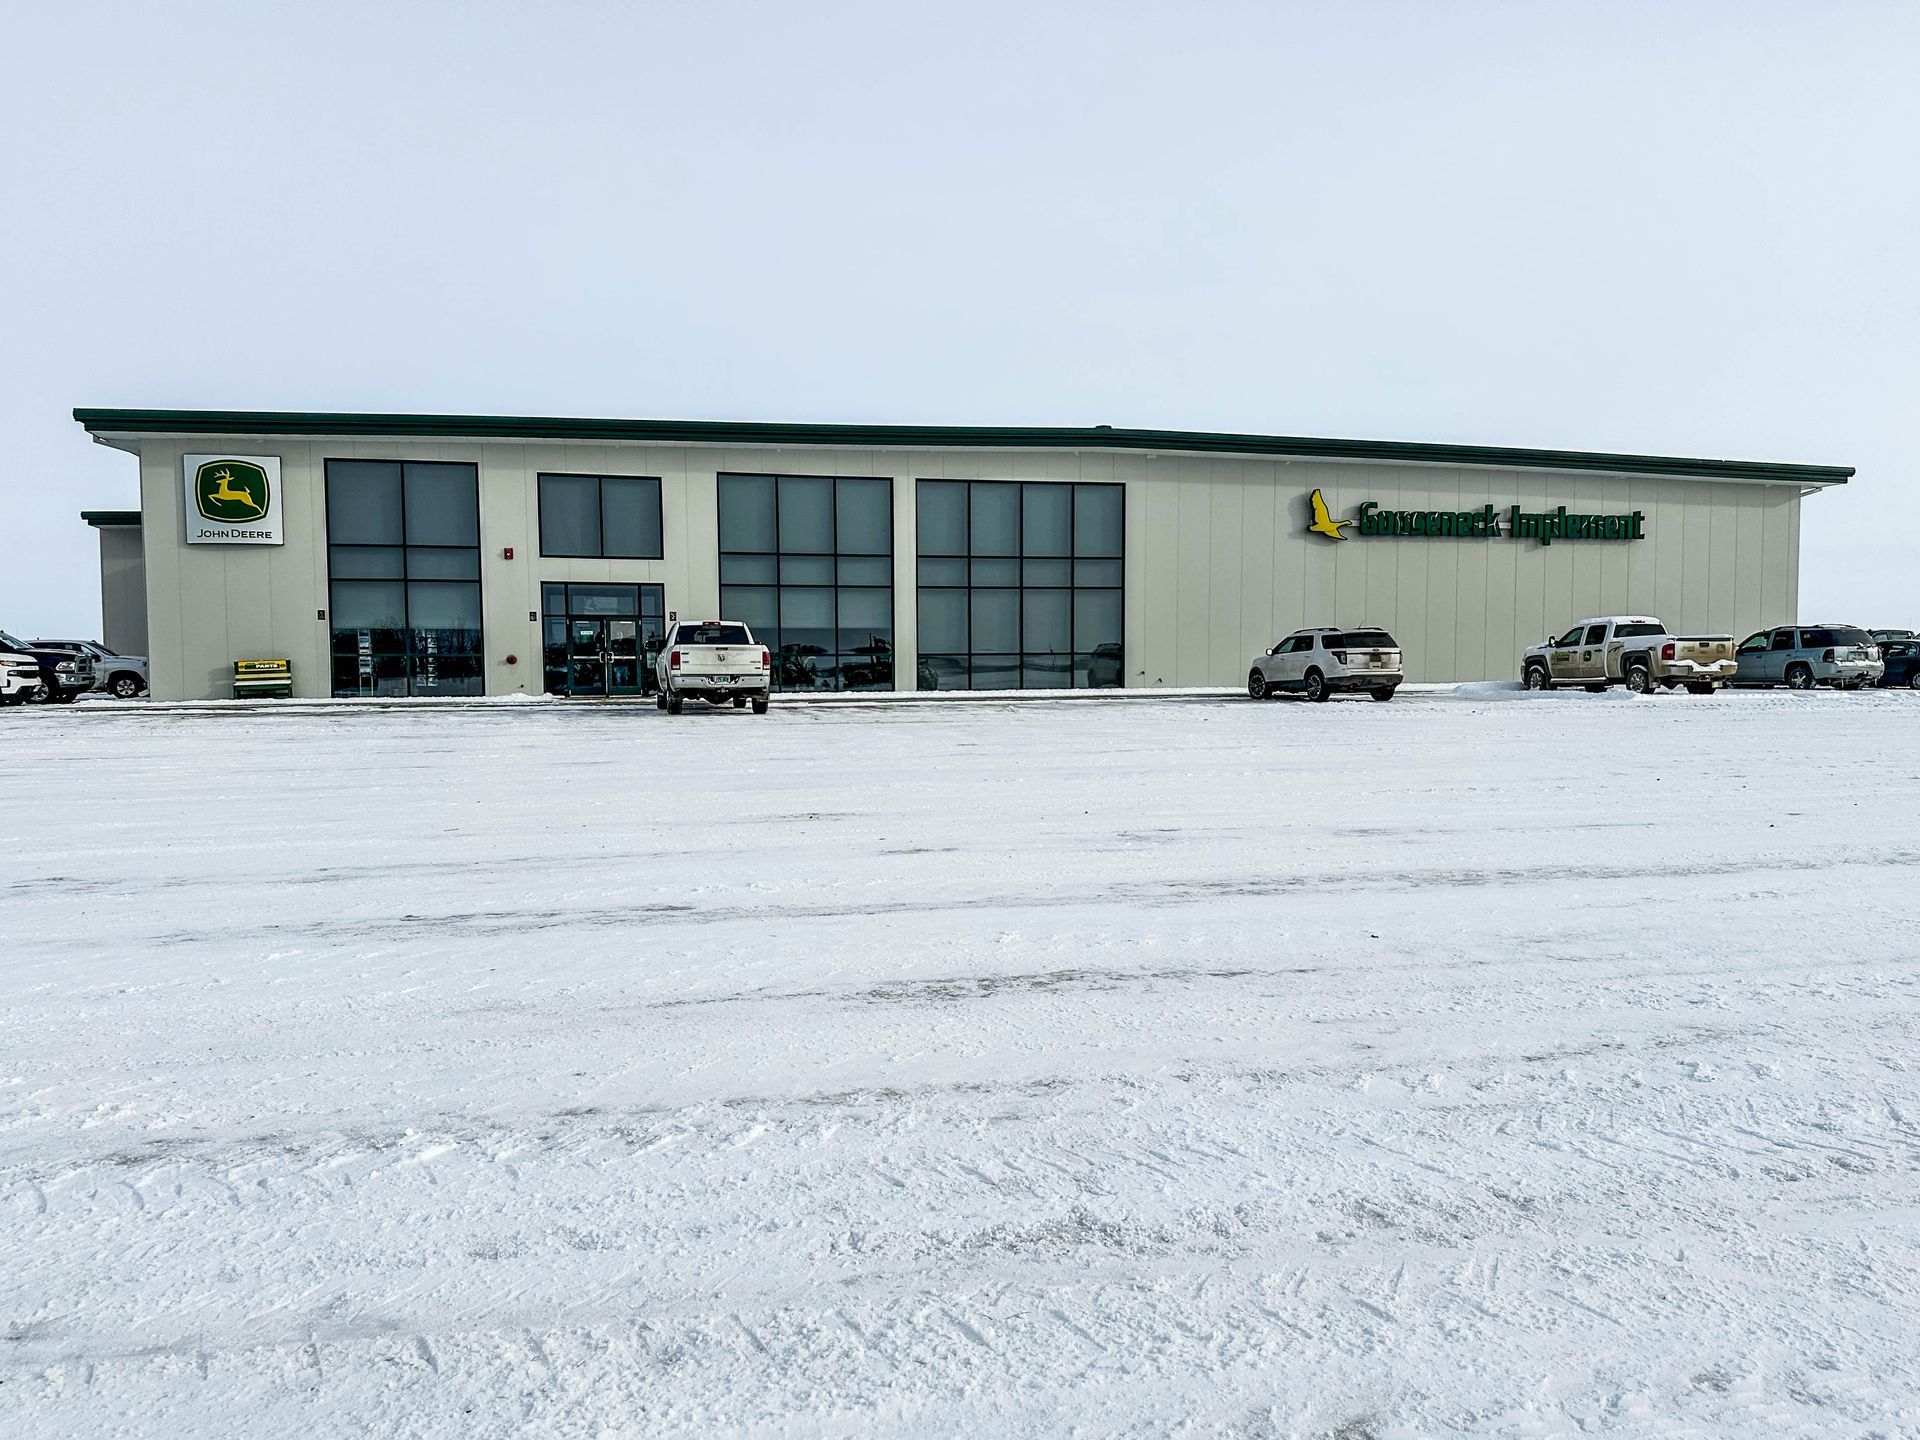 Exterior image of the Kenmare, North Dakota Gooseneck Implement store.